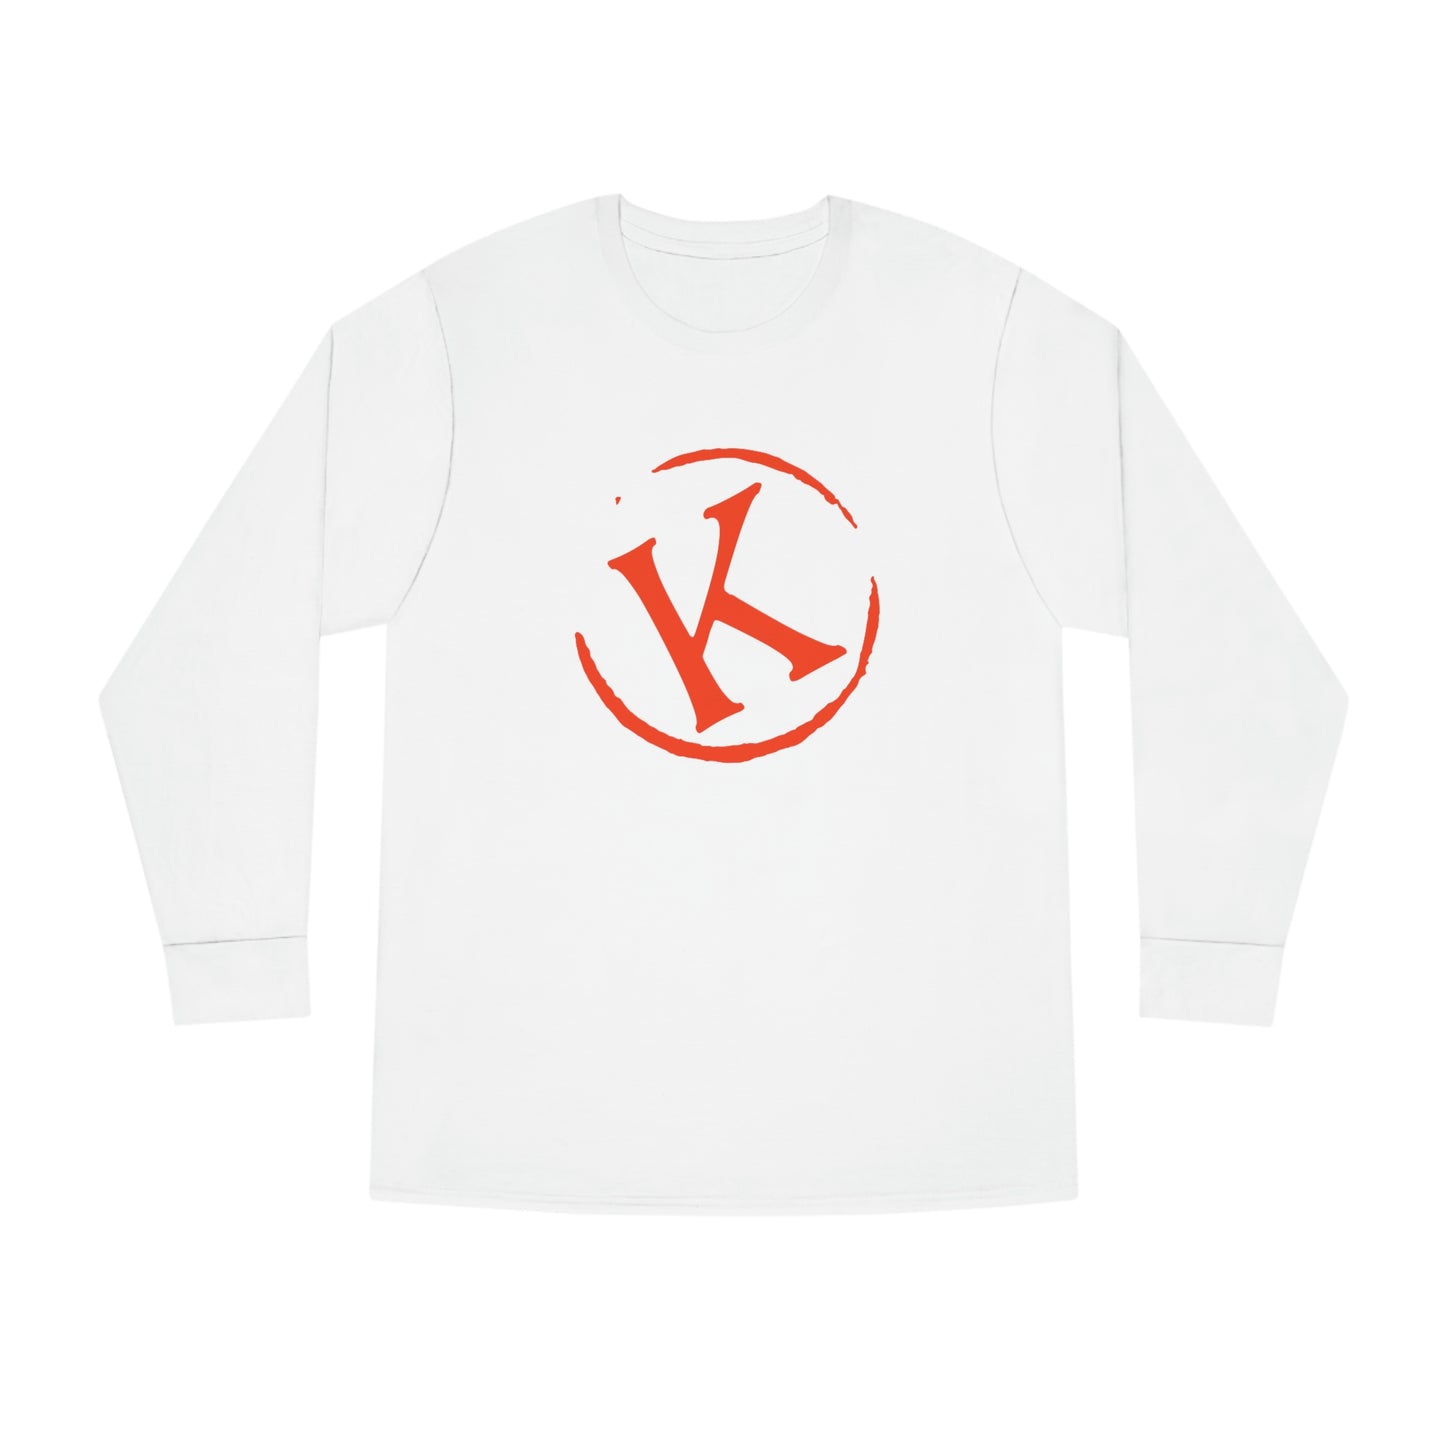 Branded K Long Sleeve Crewneck Tee #M08-01F